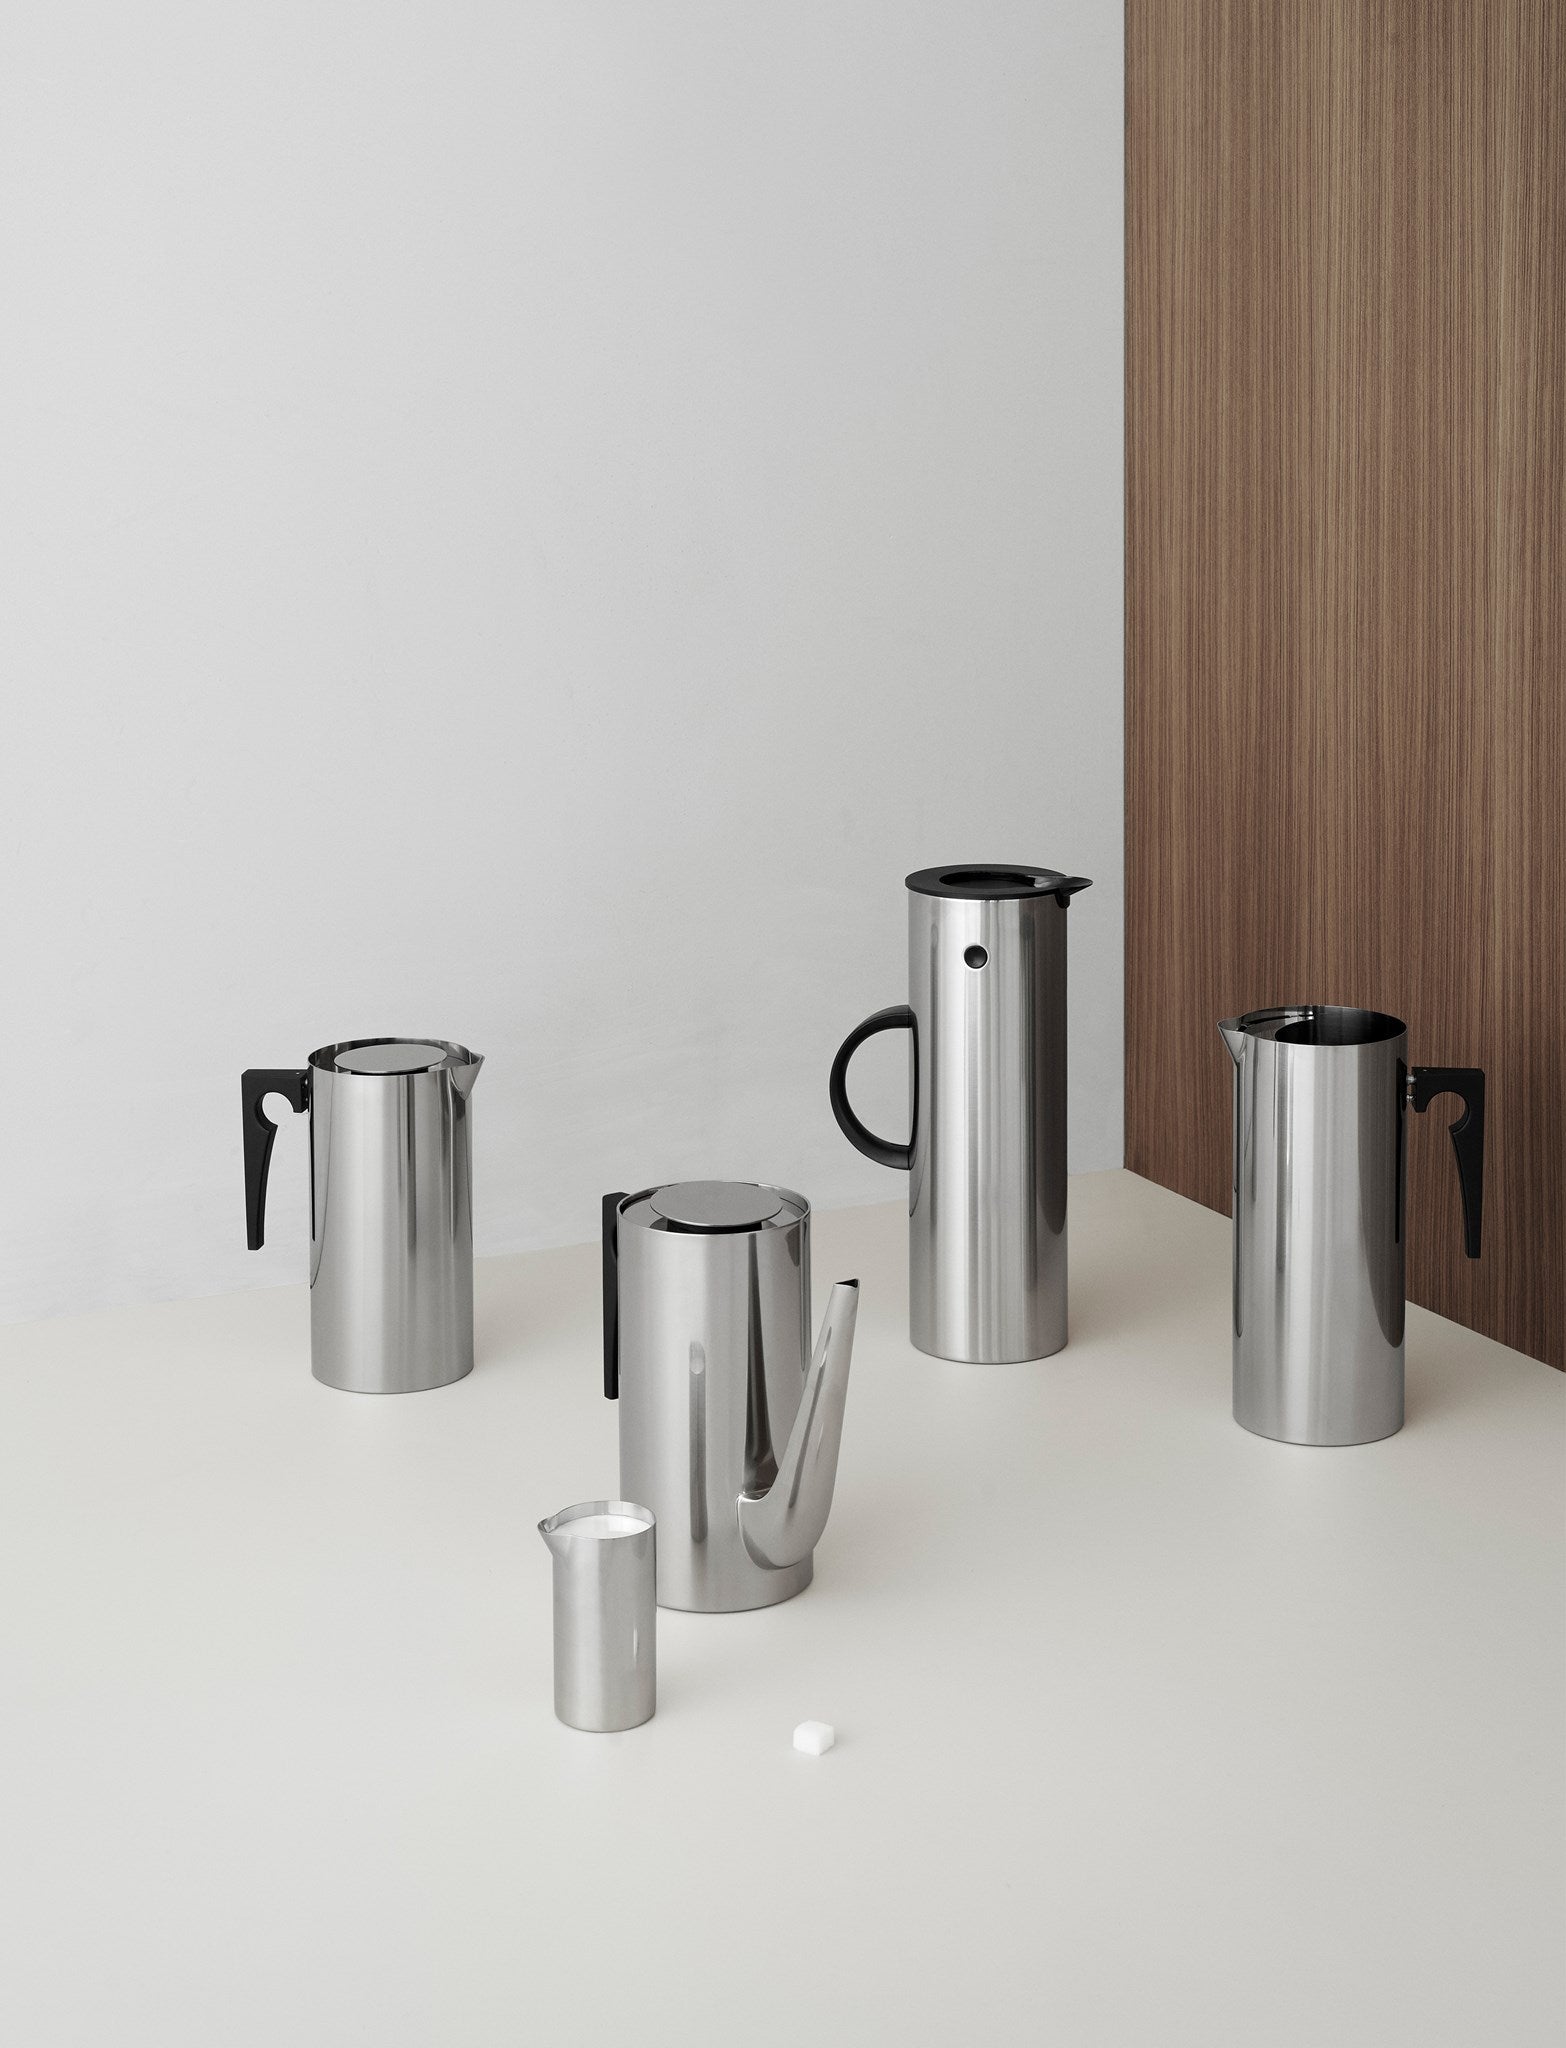 Stelton Arne Jacobsen Coffee Pot 1,5 L